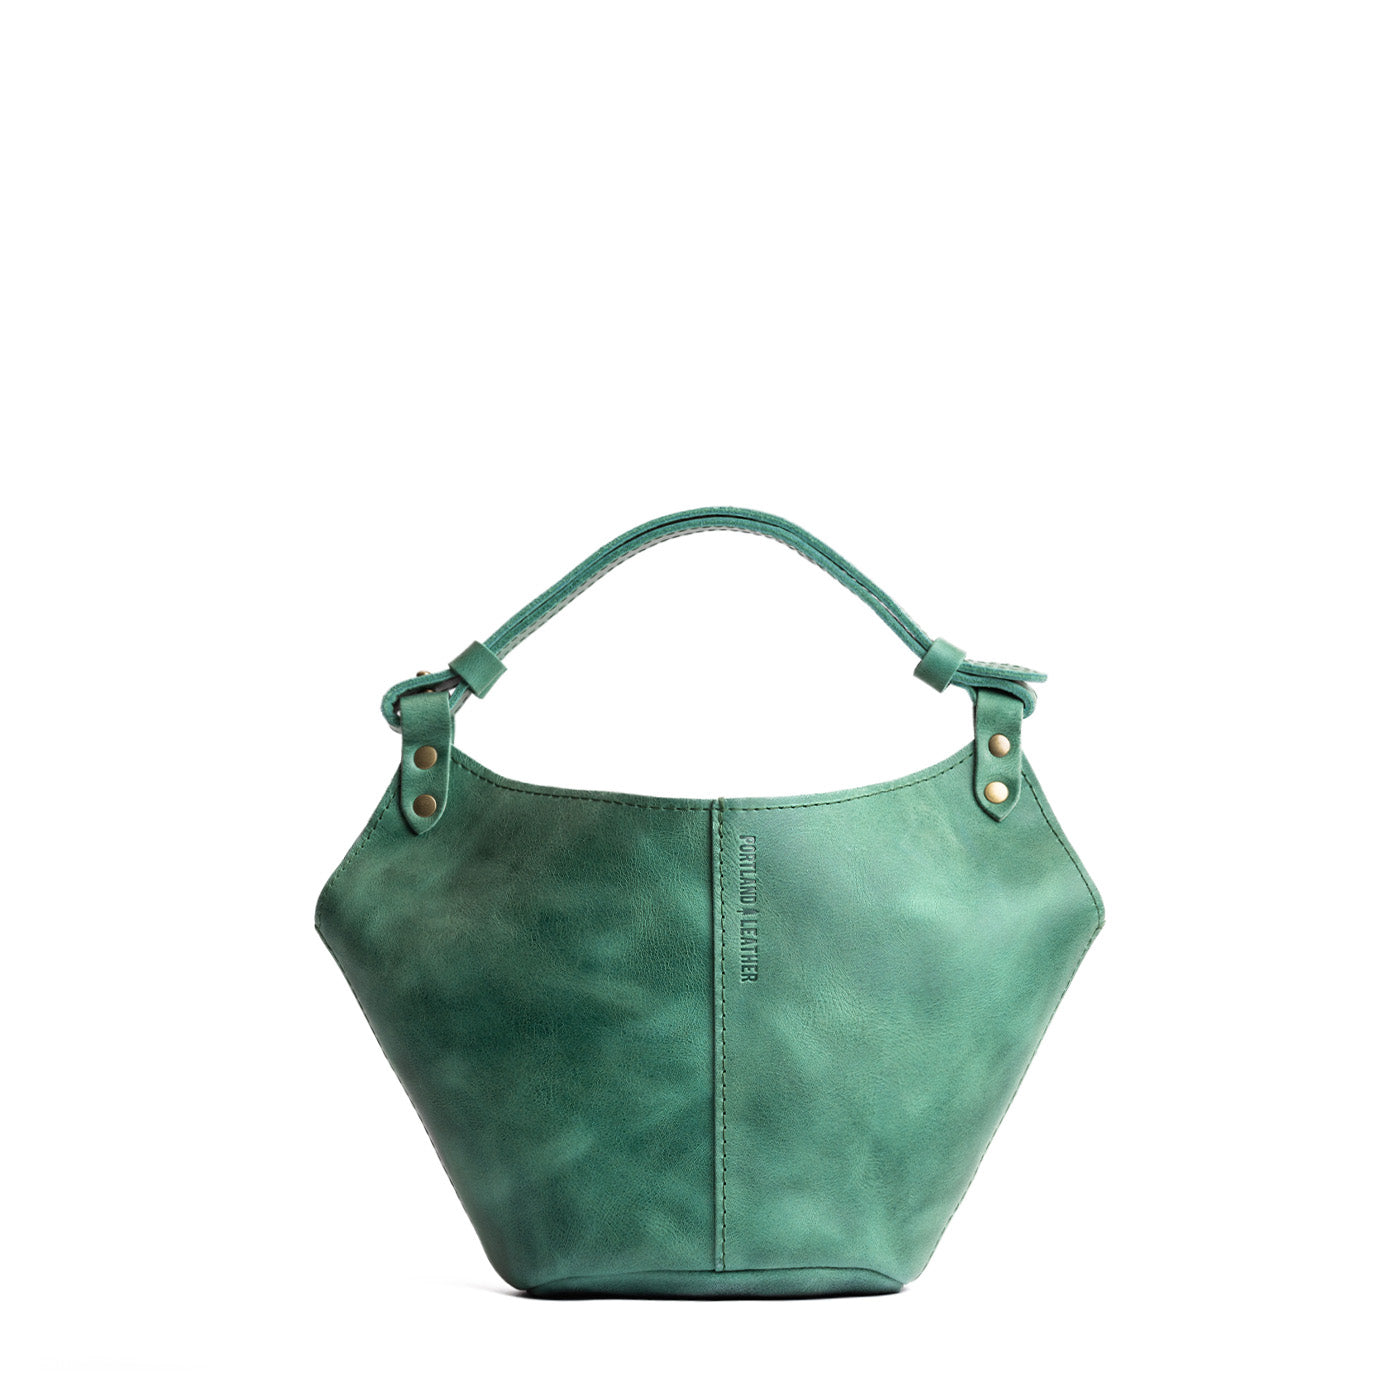 Surf*Small | Structured bucket shaped handbag with an adjustable shoulder strap